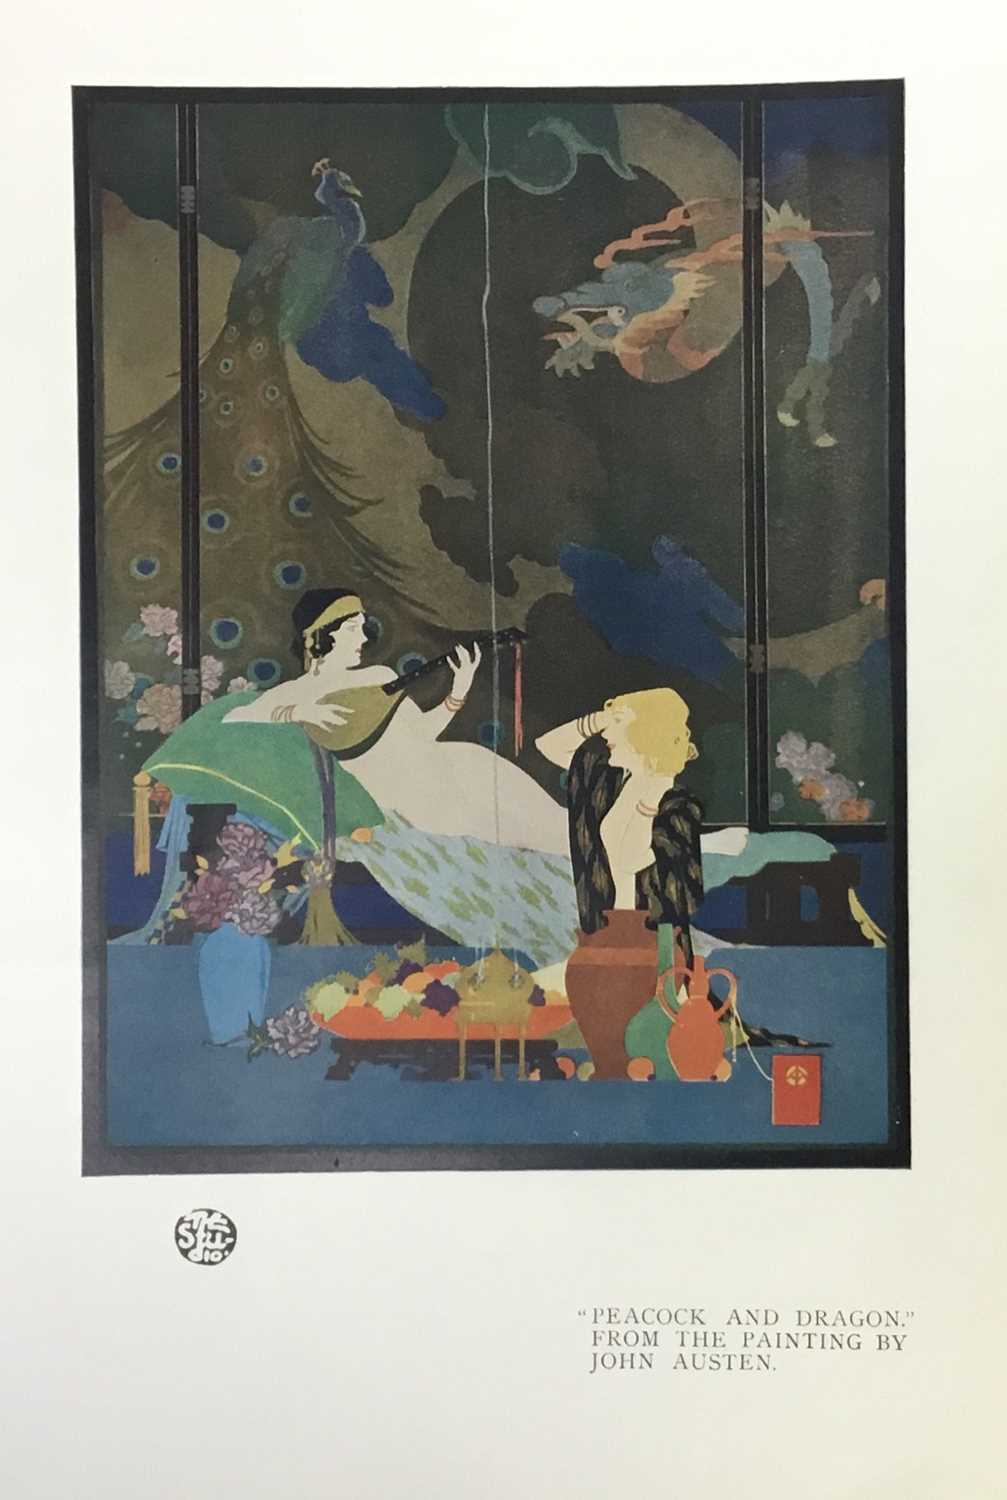 John Austen, 1886-1948. Art Nouveau studio lithograph, “Peacock And Dragon”. Studio mark “The Studio